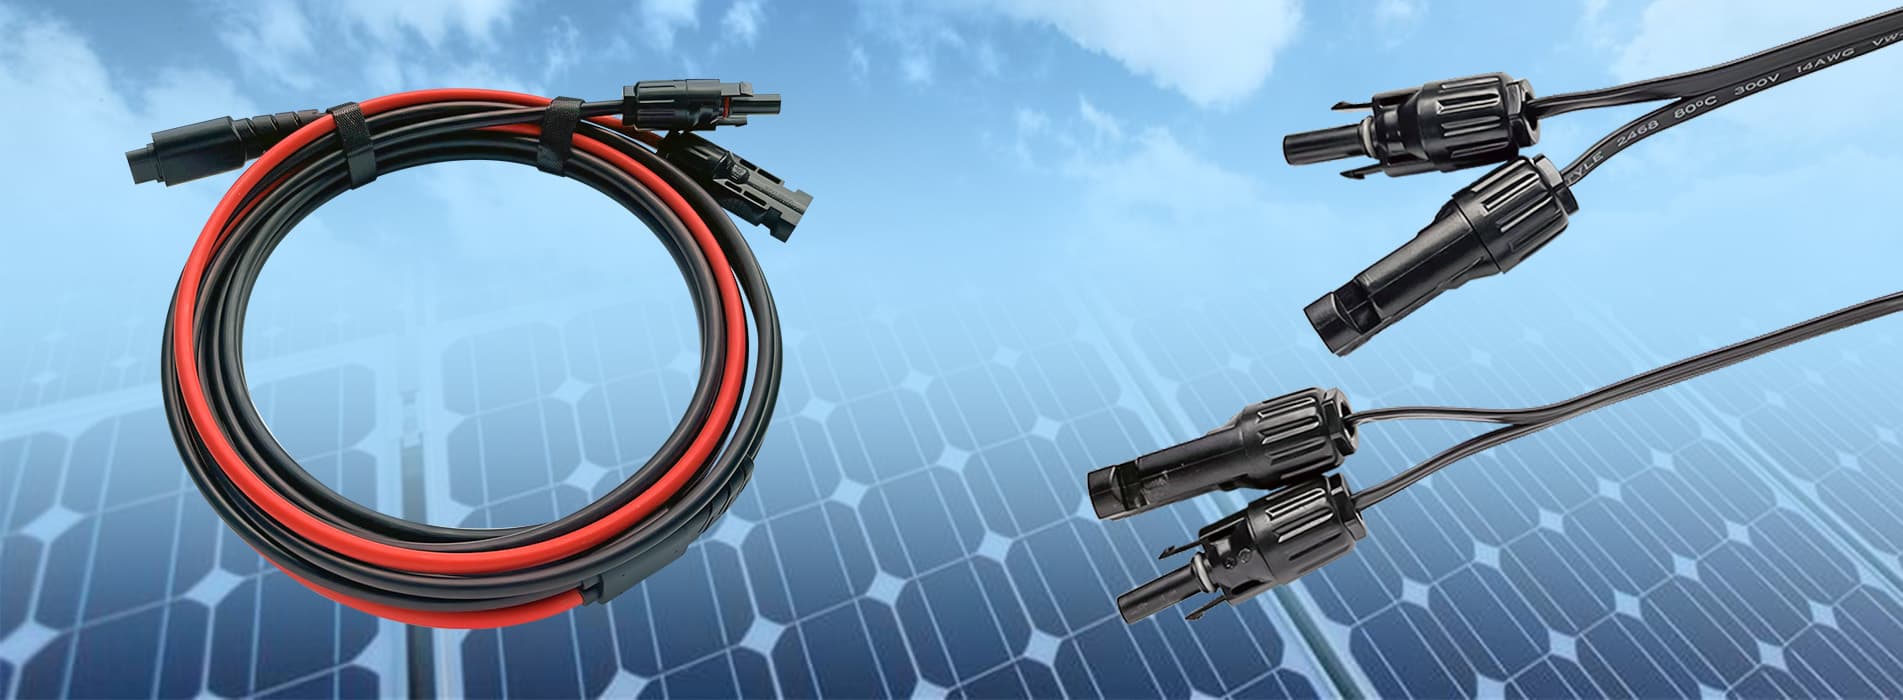 Conectores e cabos para painéis solares